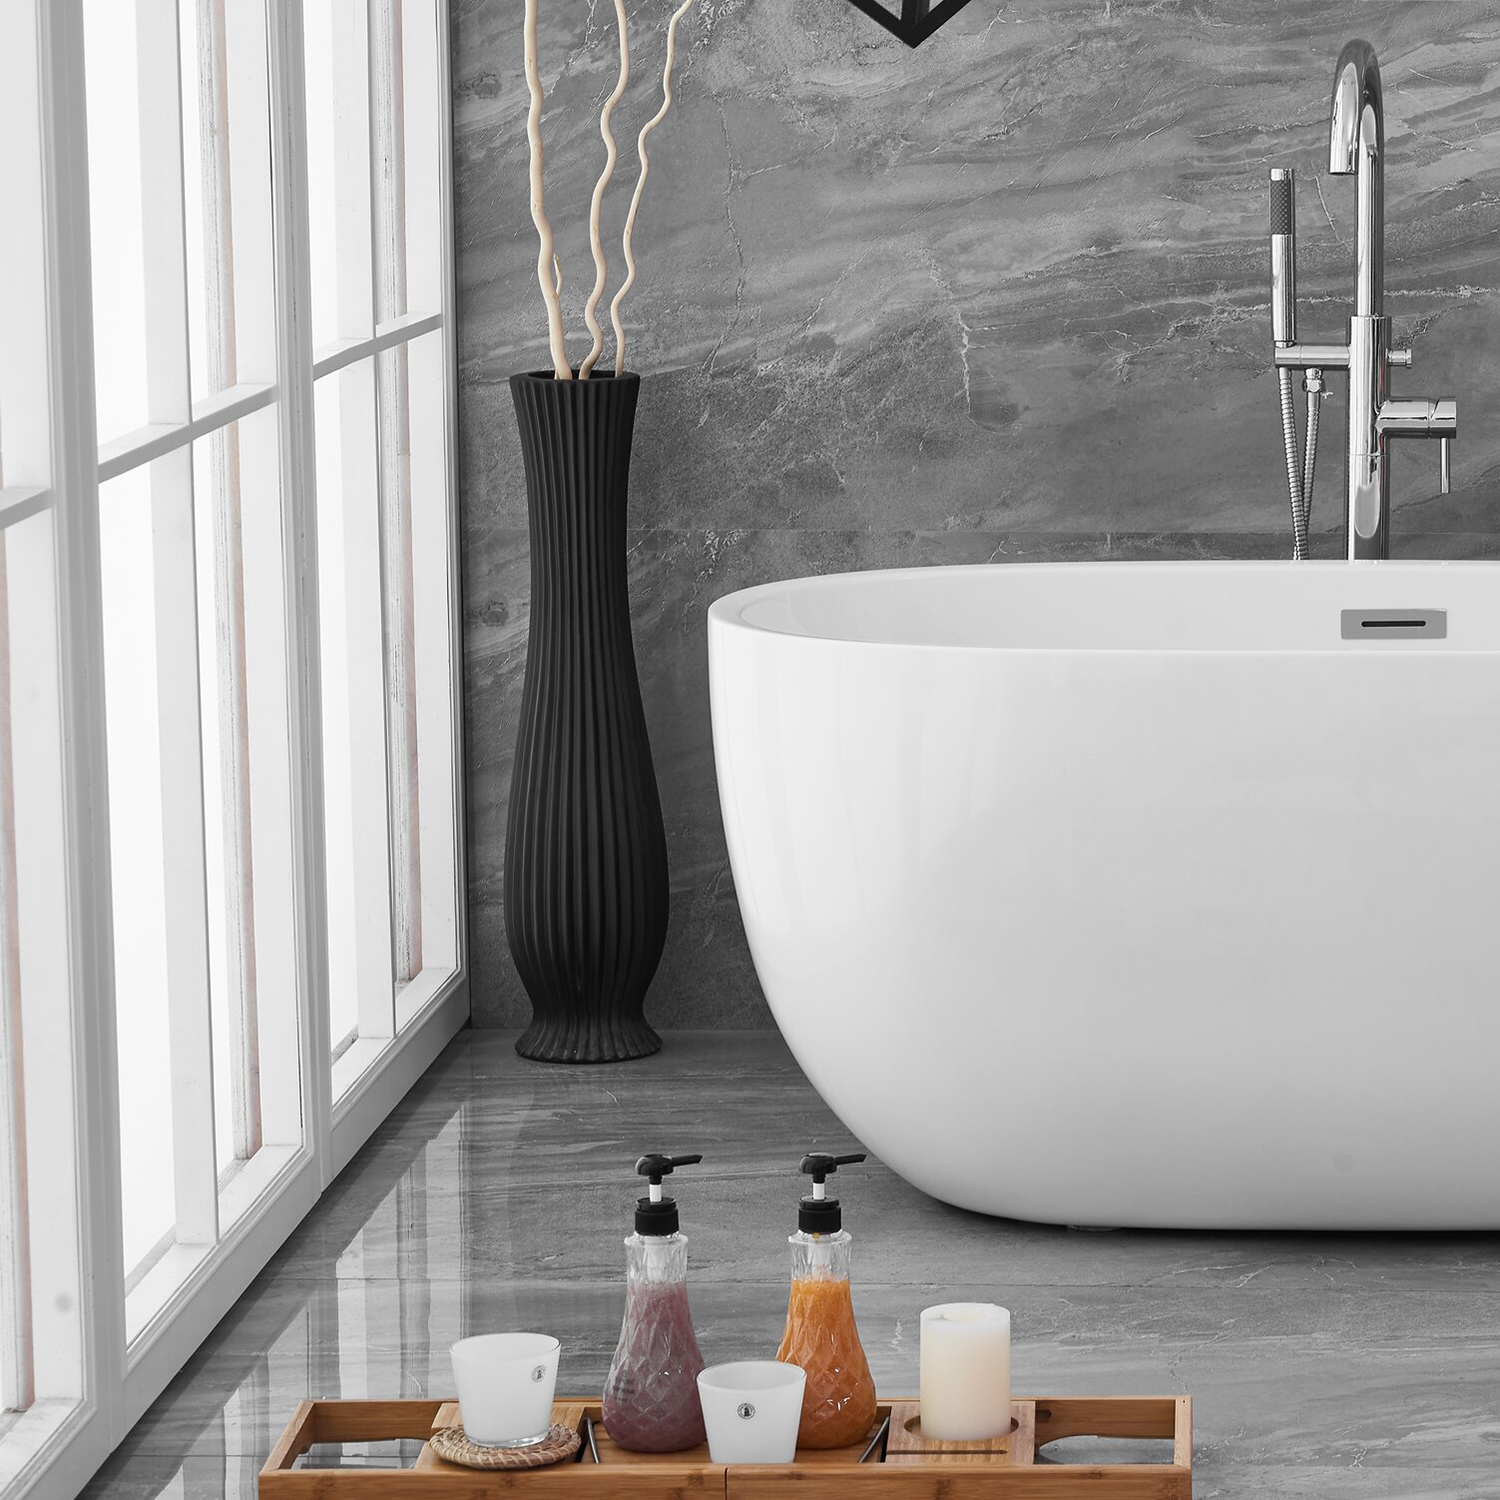 Popular style thin edge artificial stone bathtub acrylic solid surface freestanding bathroom tub for hotel